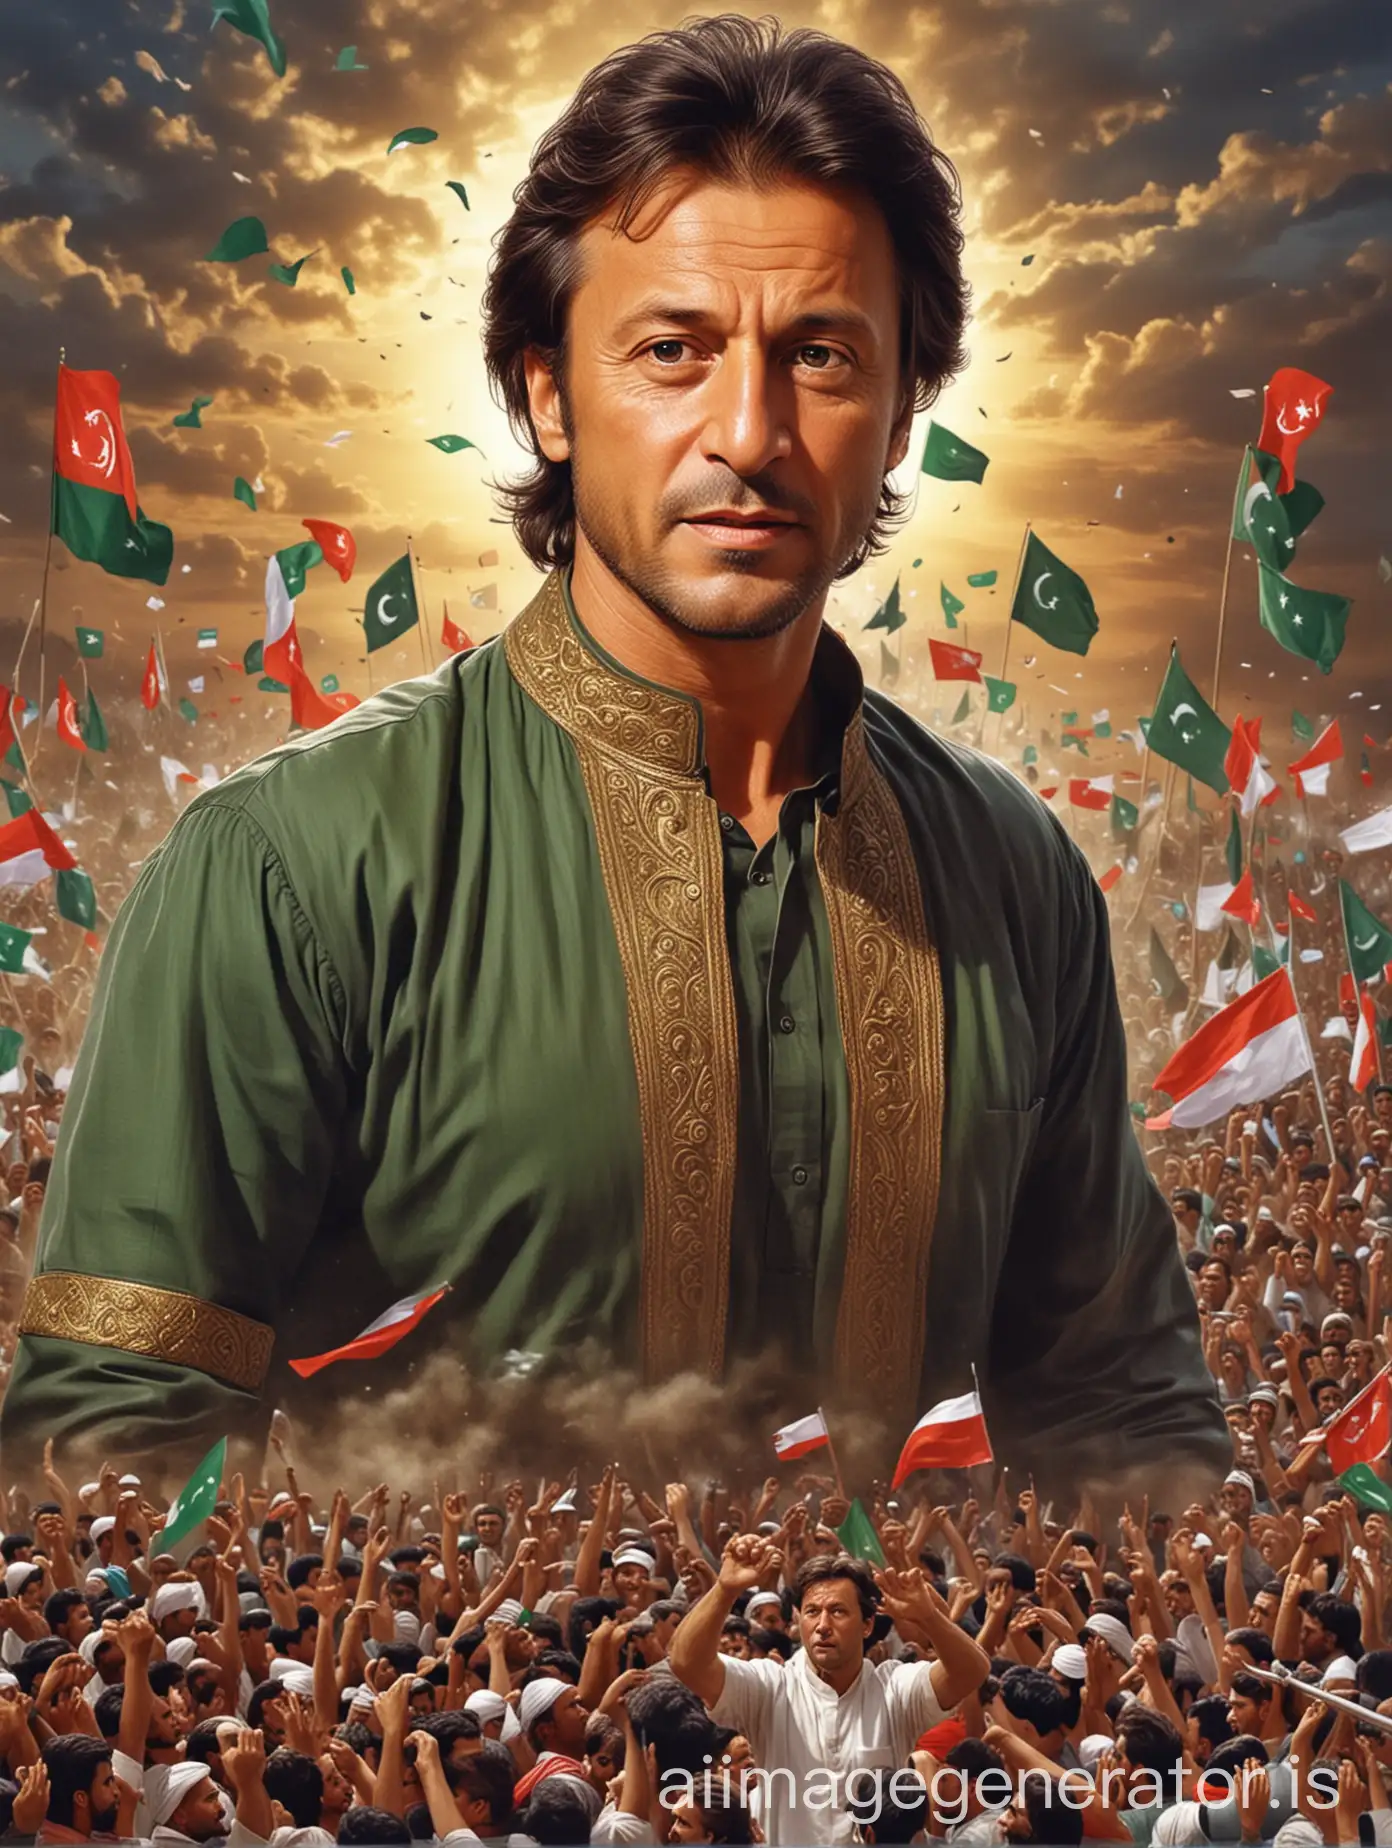 Imran-Khan-Portrayed-as-a-Heroic-Figure-in-a-Dramatic-Scene